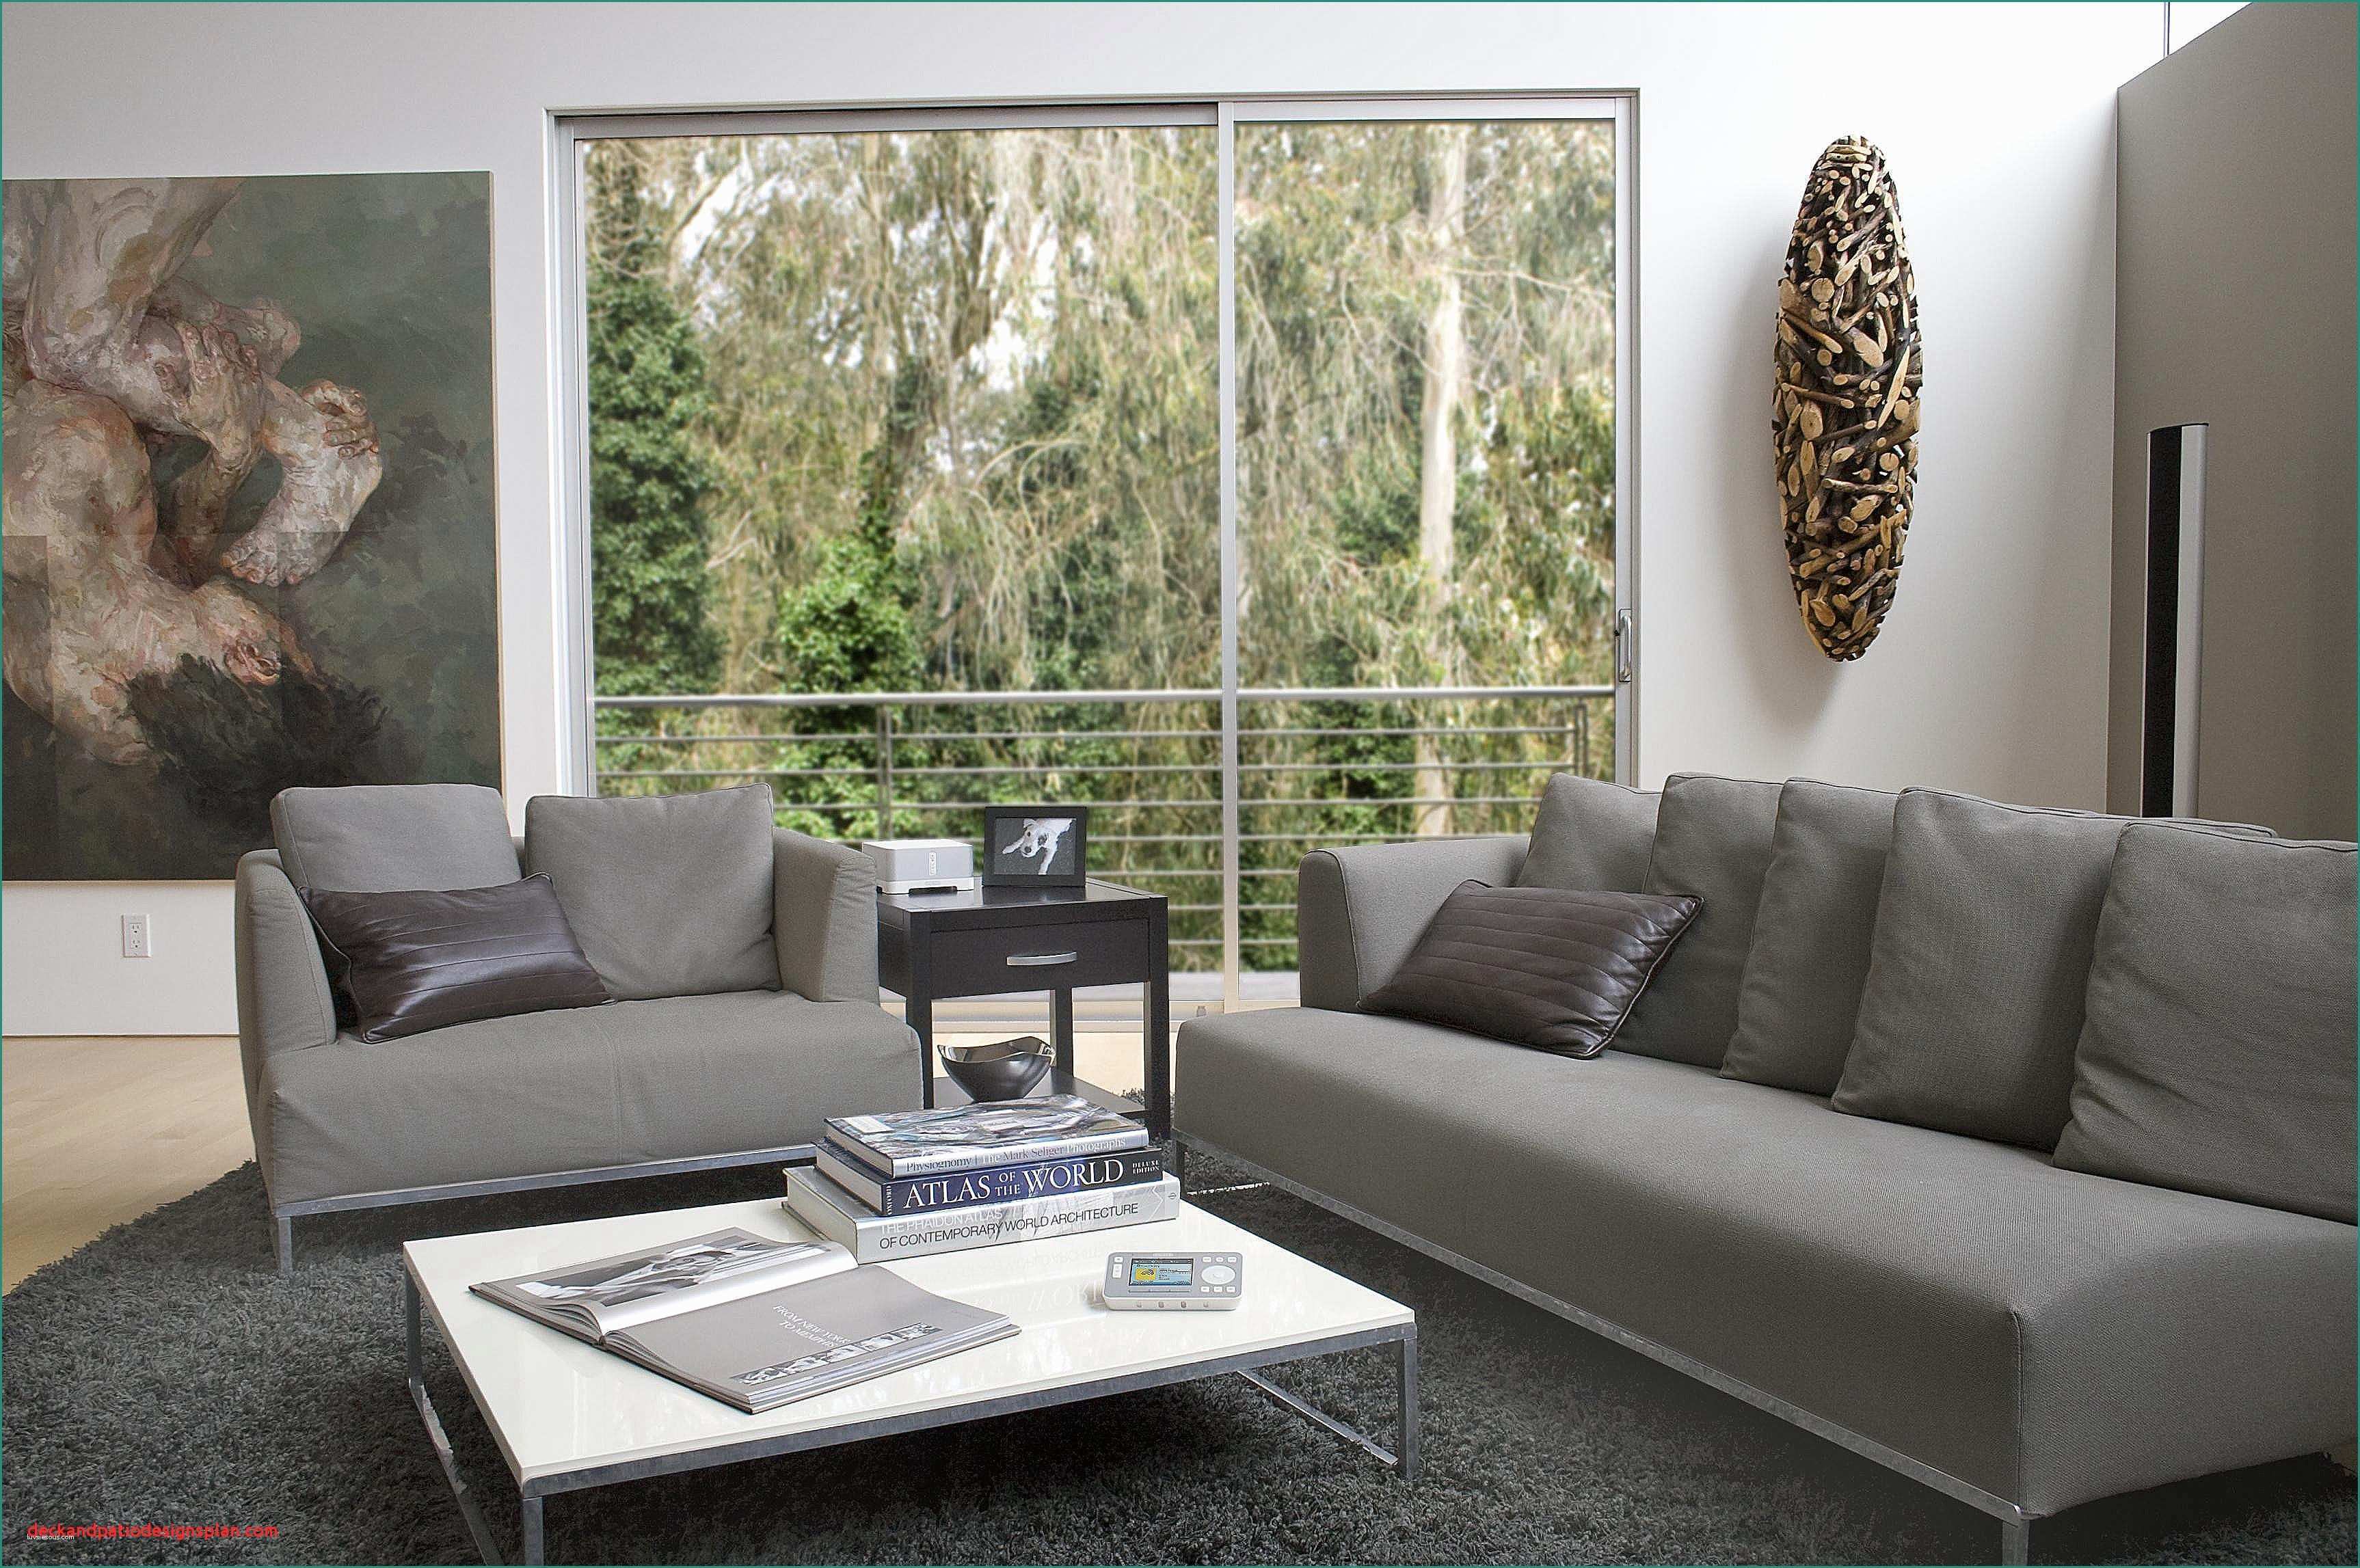 Cubi In Plexiglass Ikea E Wohnlandschaft Poco Luxus sofa Chairs Inspirational Gunstiges Big